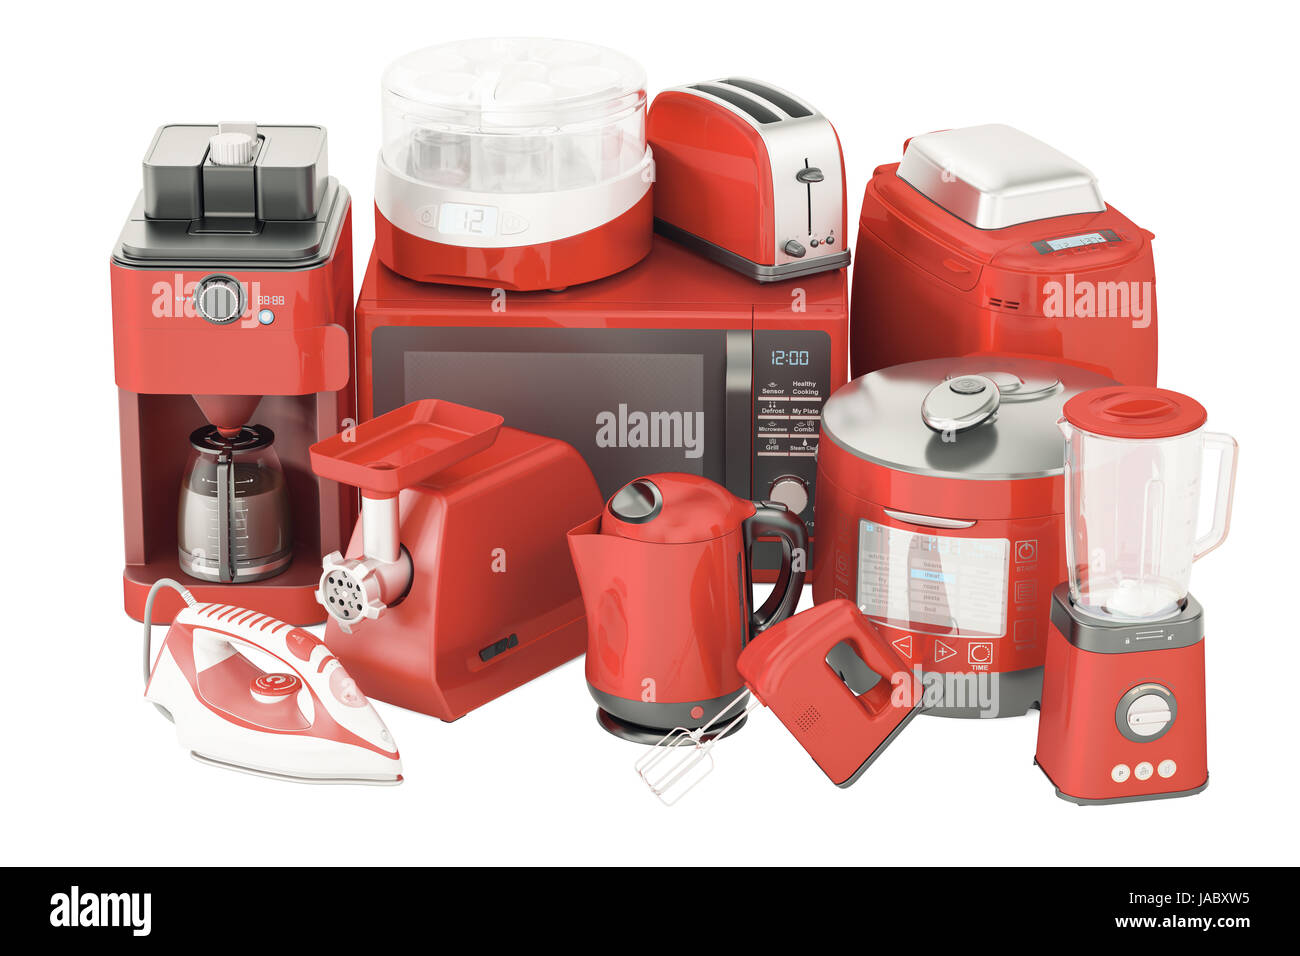 https://c8.alamy.com/comp/JABXW5/set-of-red-kitchen-home-appliances-toaster-kettle-coffeemaker-iron-JABXW5.jpg